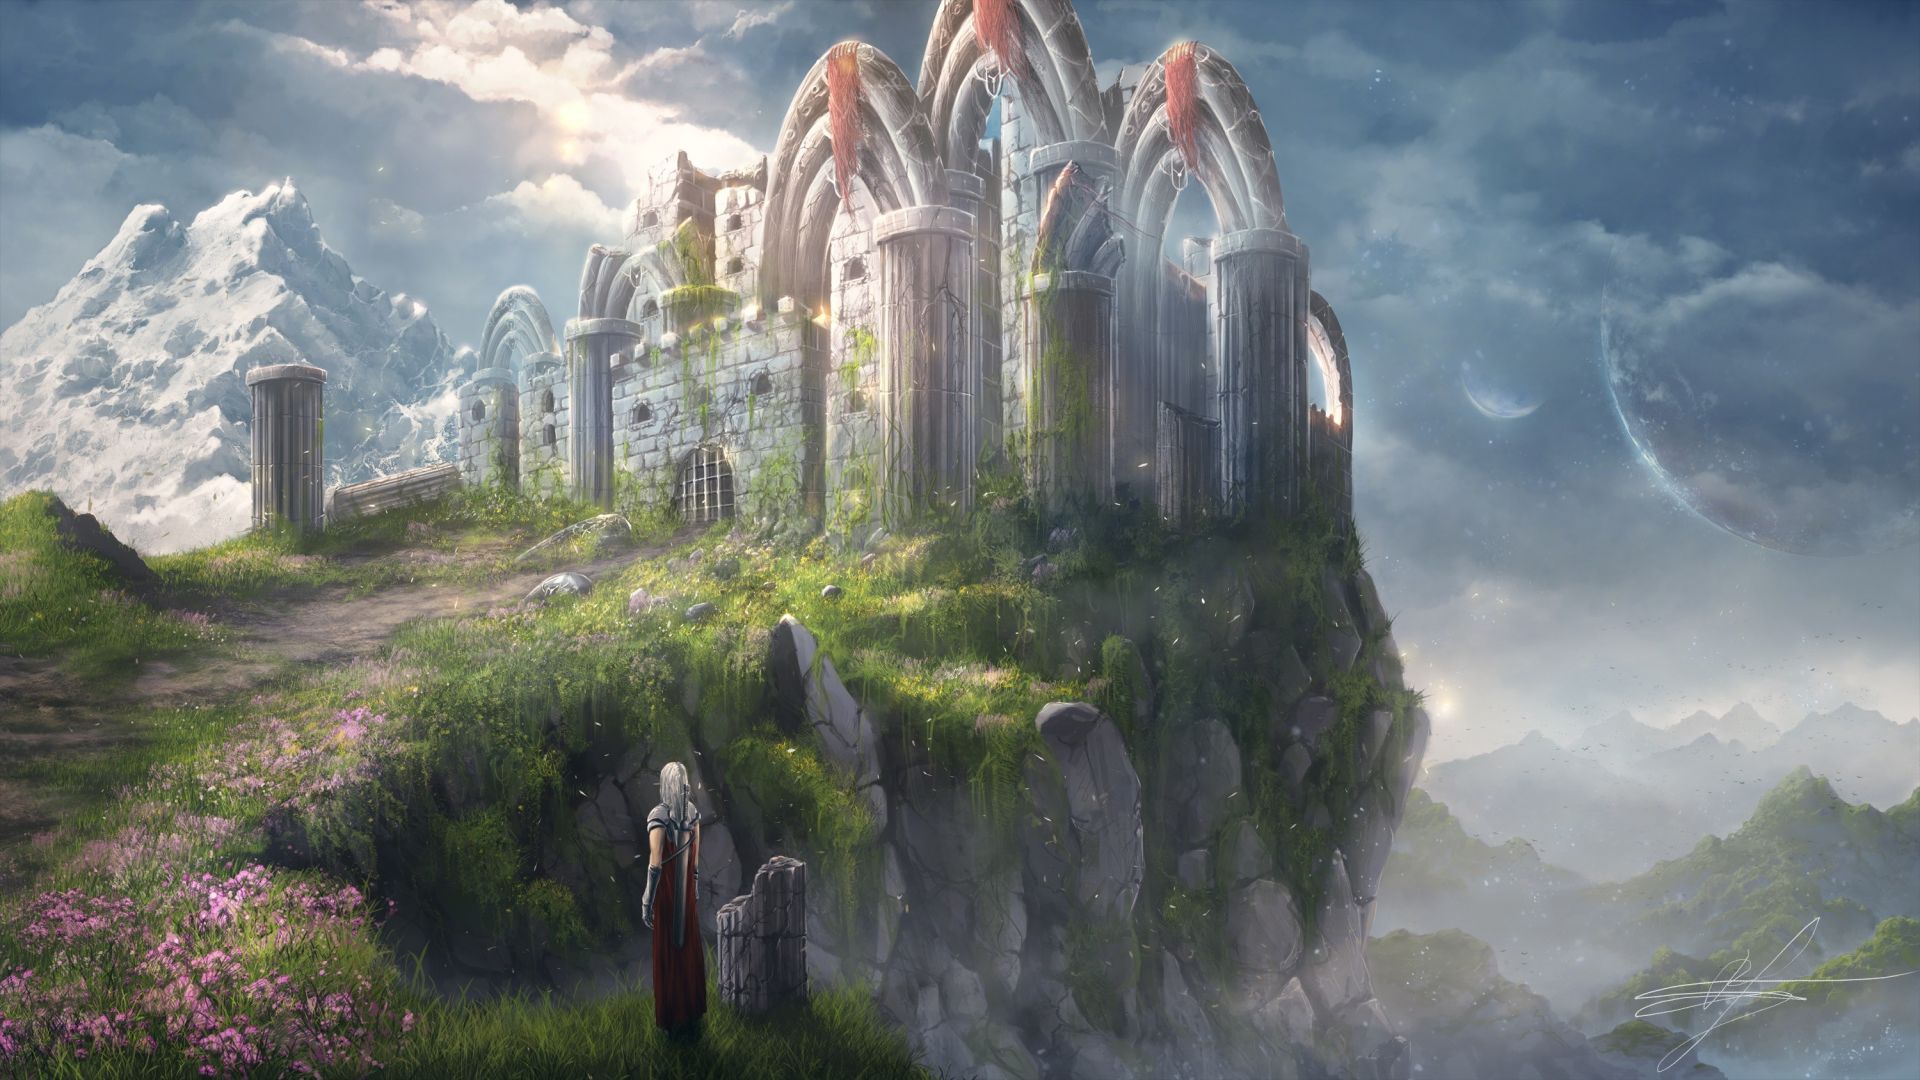 Desktop Wallpaper Fantasy Artwork Of Castle, Hd Image, Picture, Background,  Edxn6y